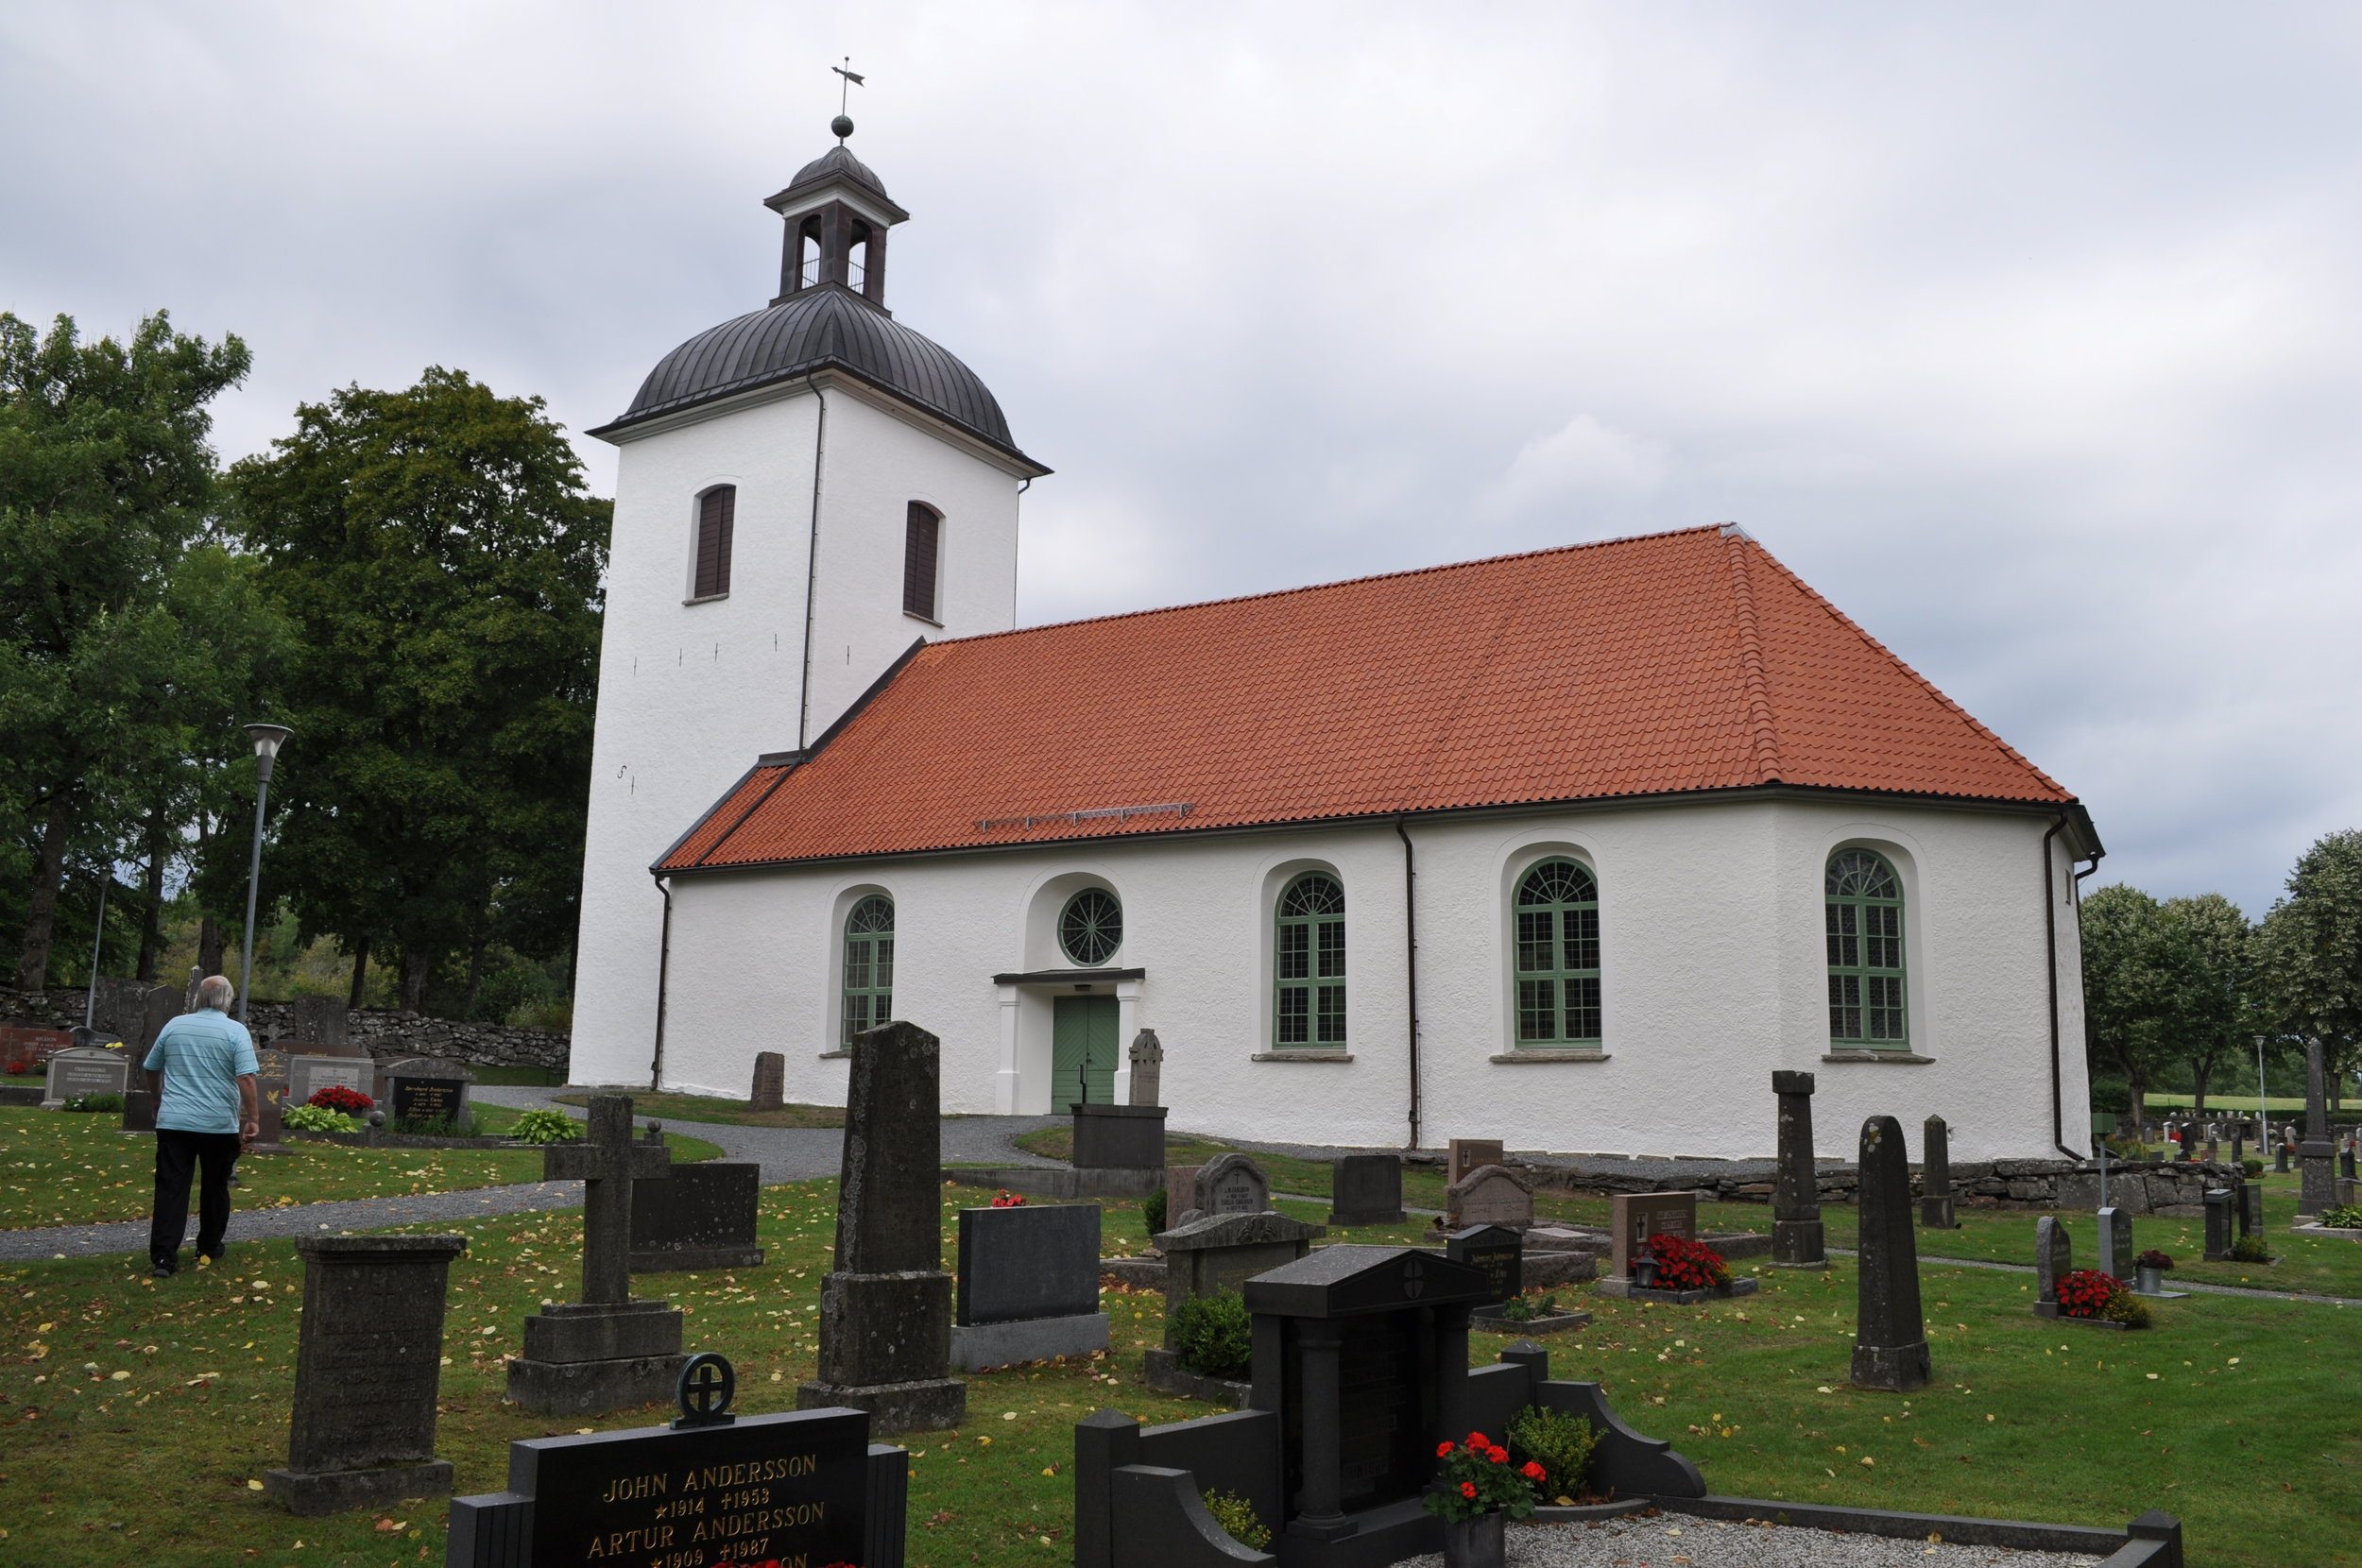 Berghems Church